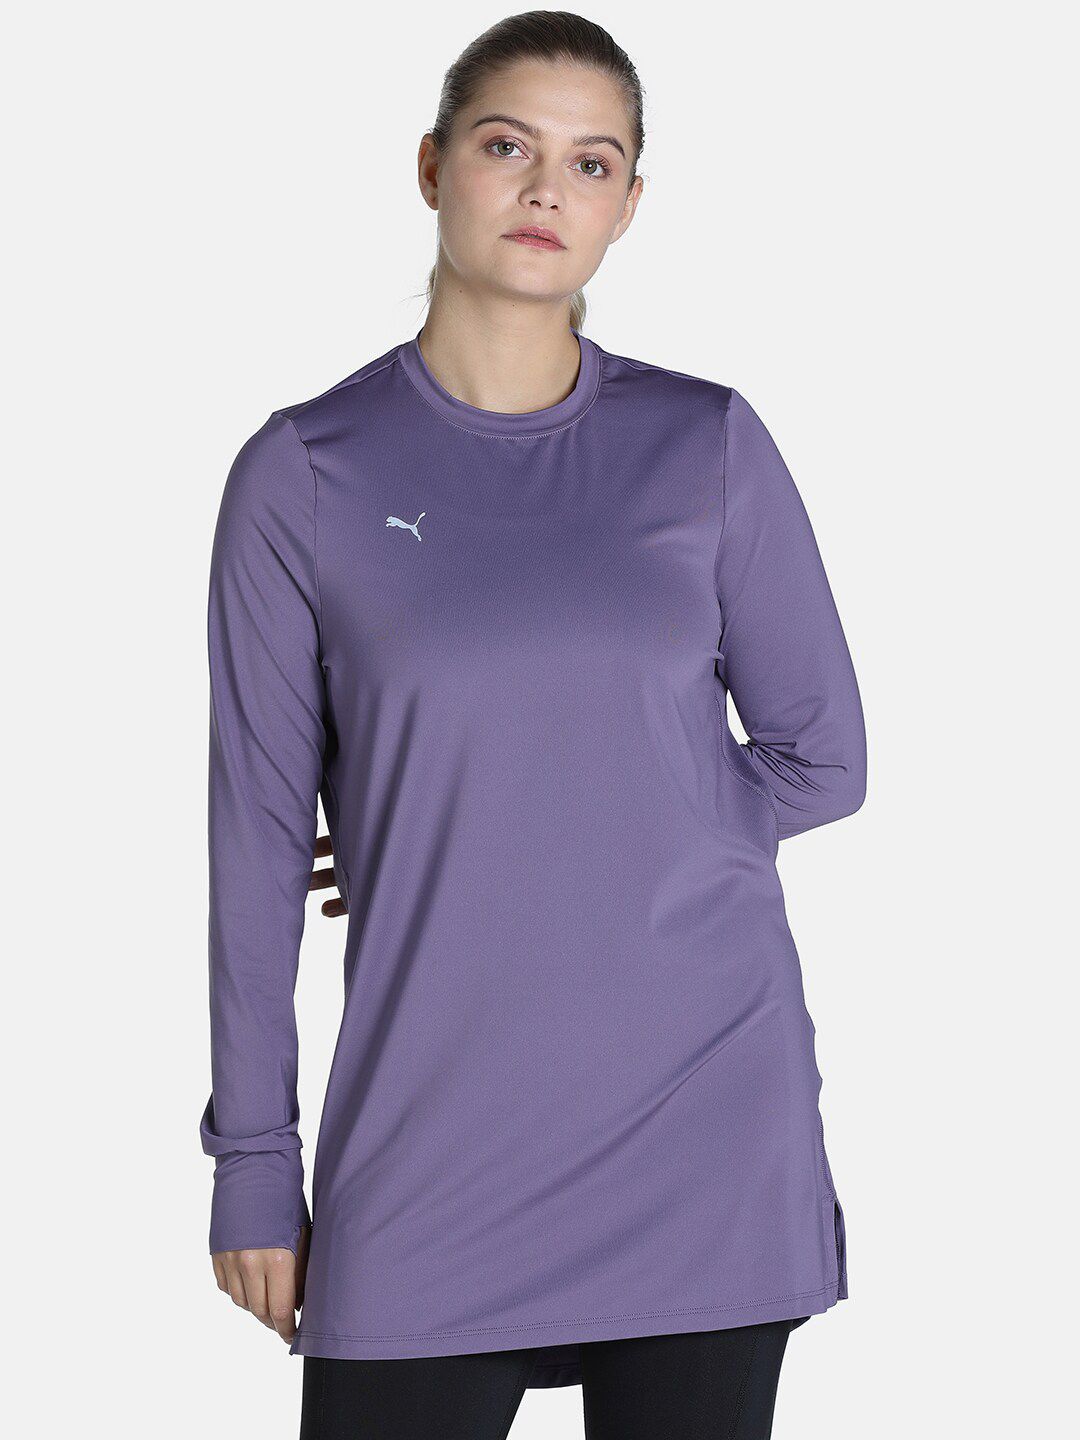 Puma Women Purple Modest Activewear Long Sleeve Training T-Shirt Price in India